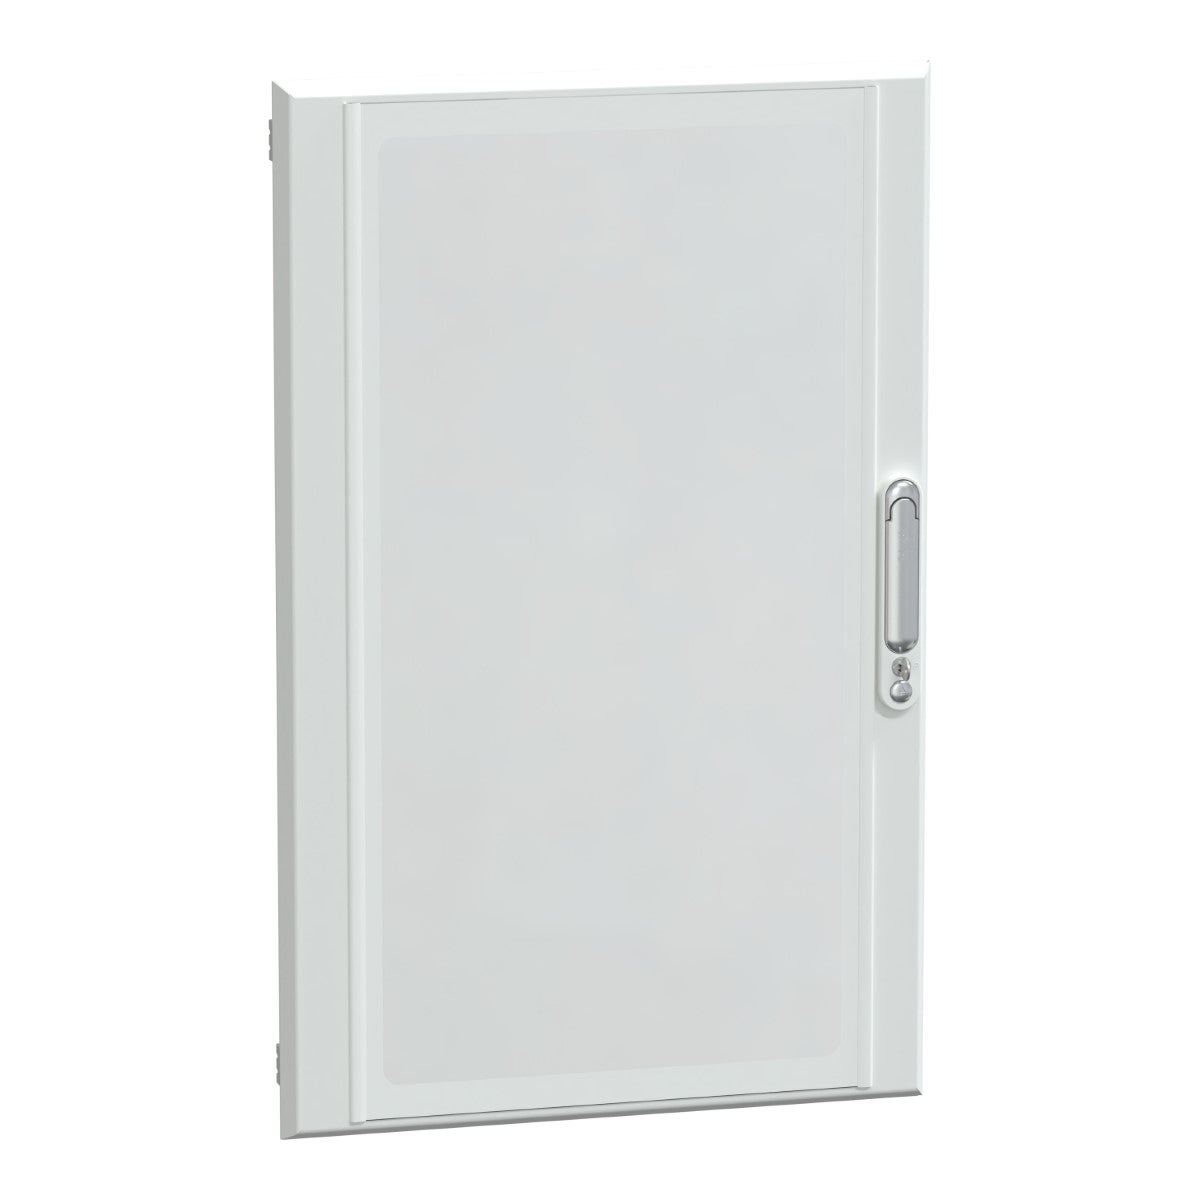 Door, PrismaSeT G, transparent type for enclosure, 18M, W600, IP30, white, RAL 9003